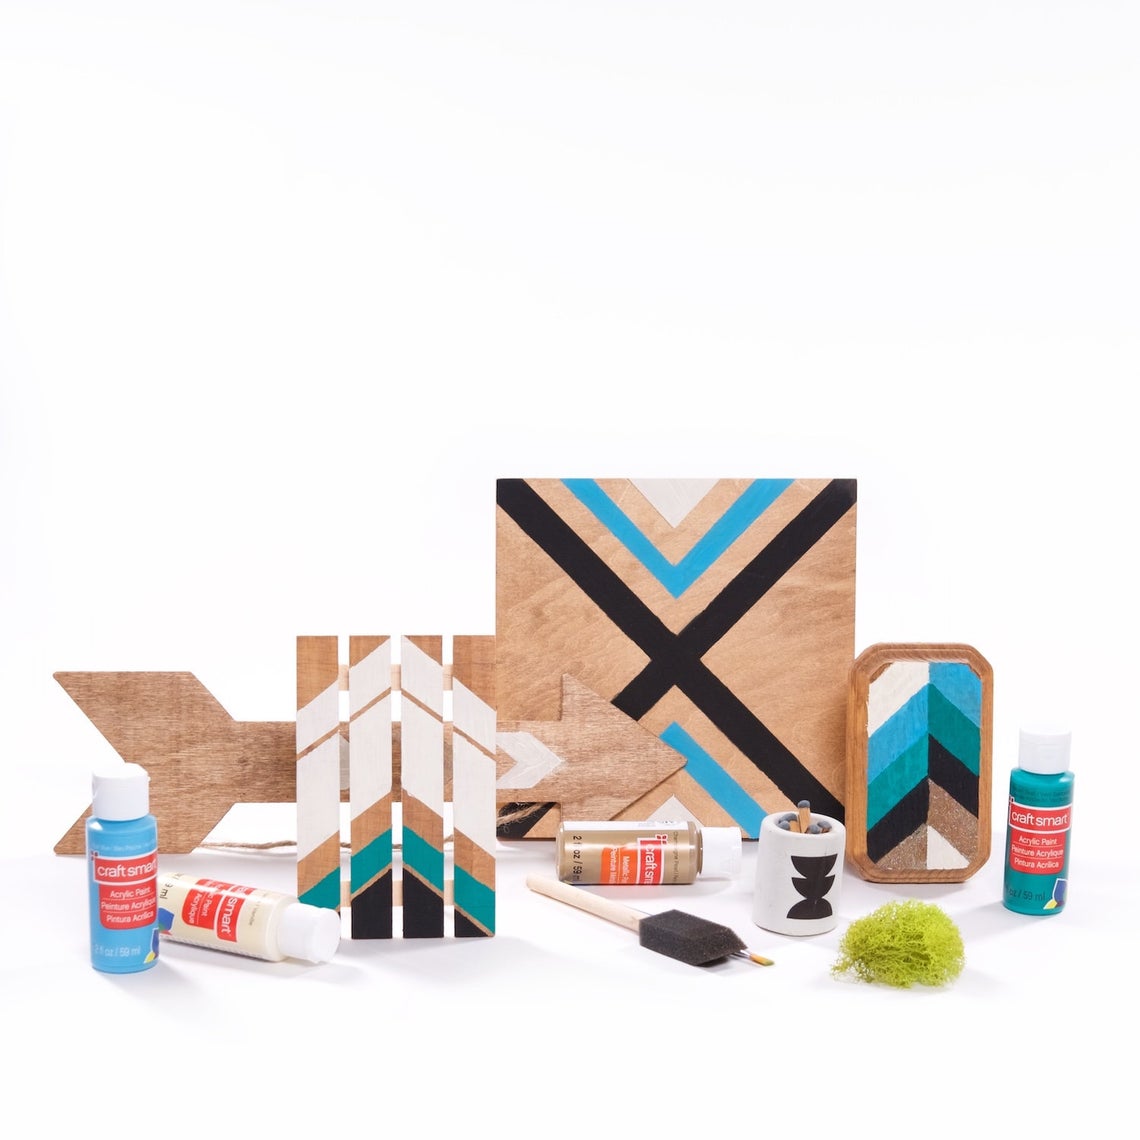 DIY Kit, Wood Art Painting Kit, Geometric Chevron Painting Supply Kit